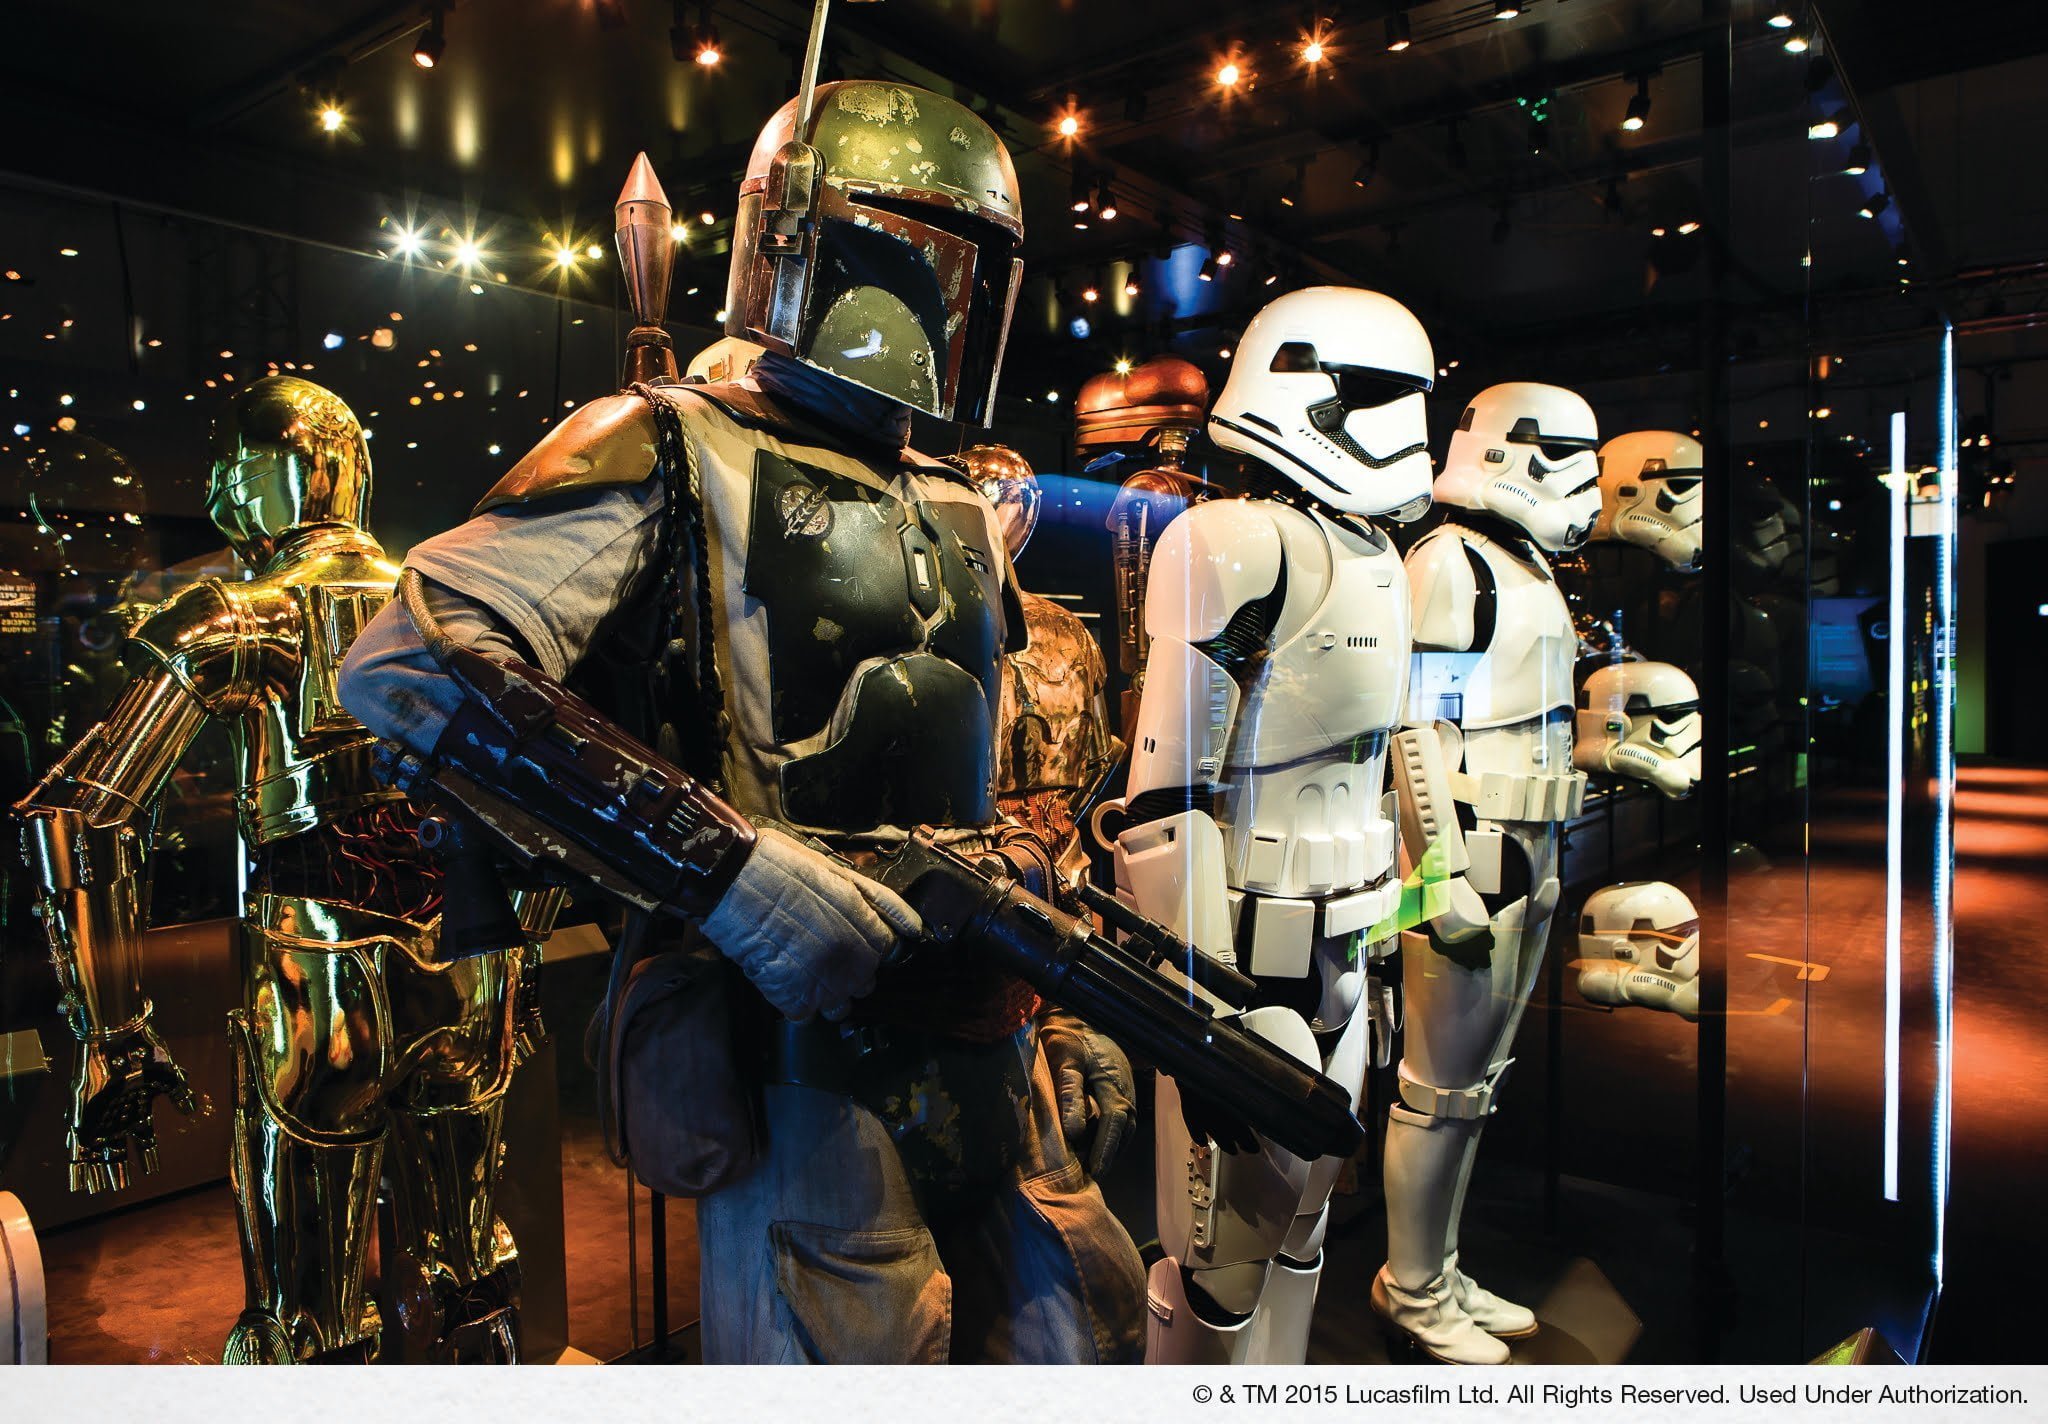 Star Wars exhibits